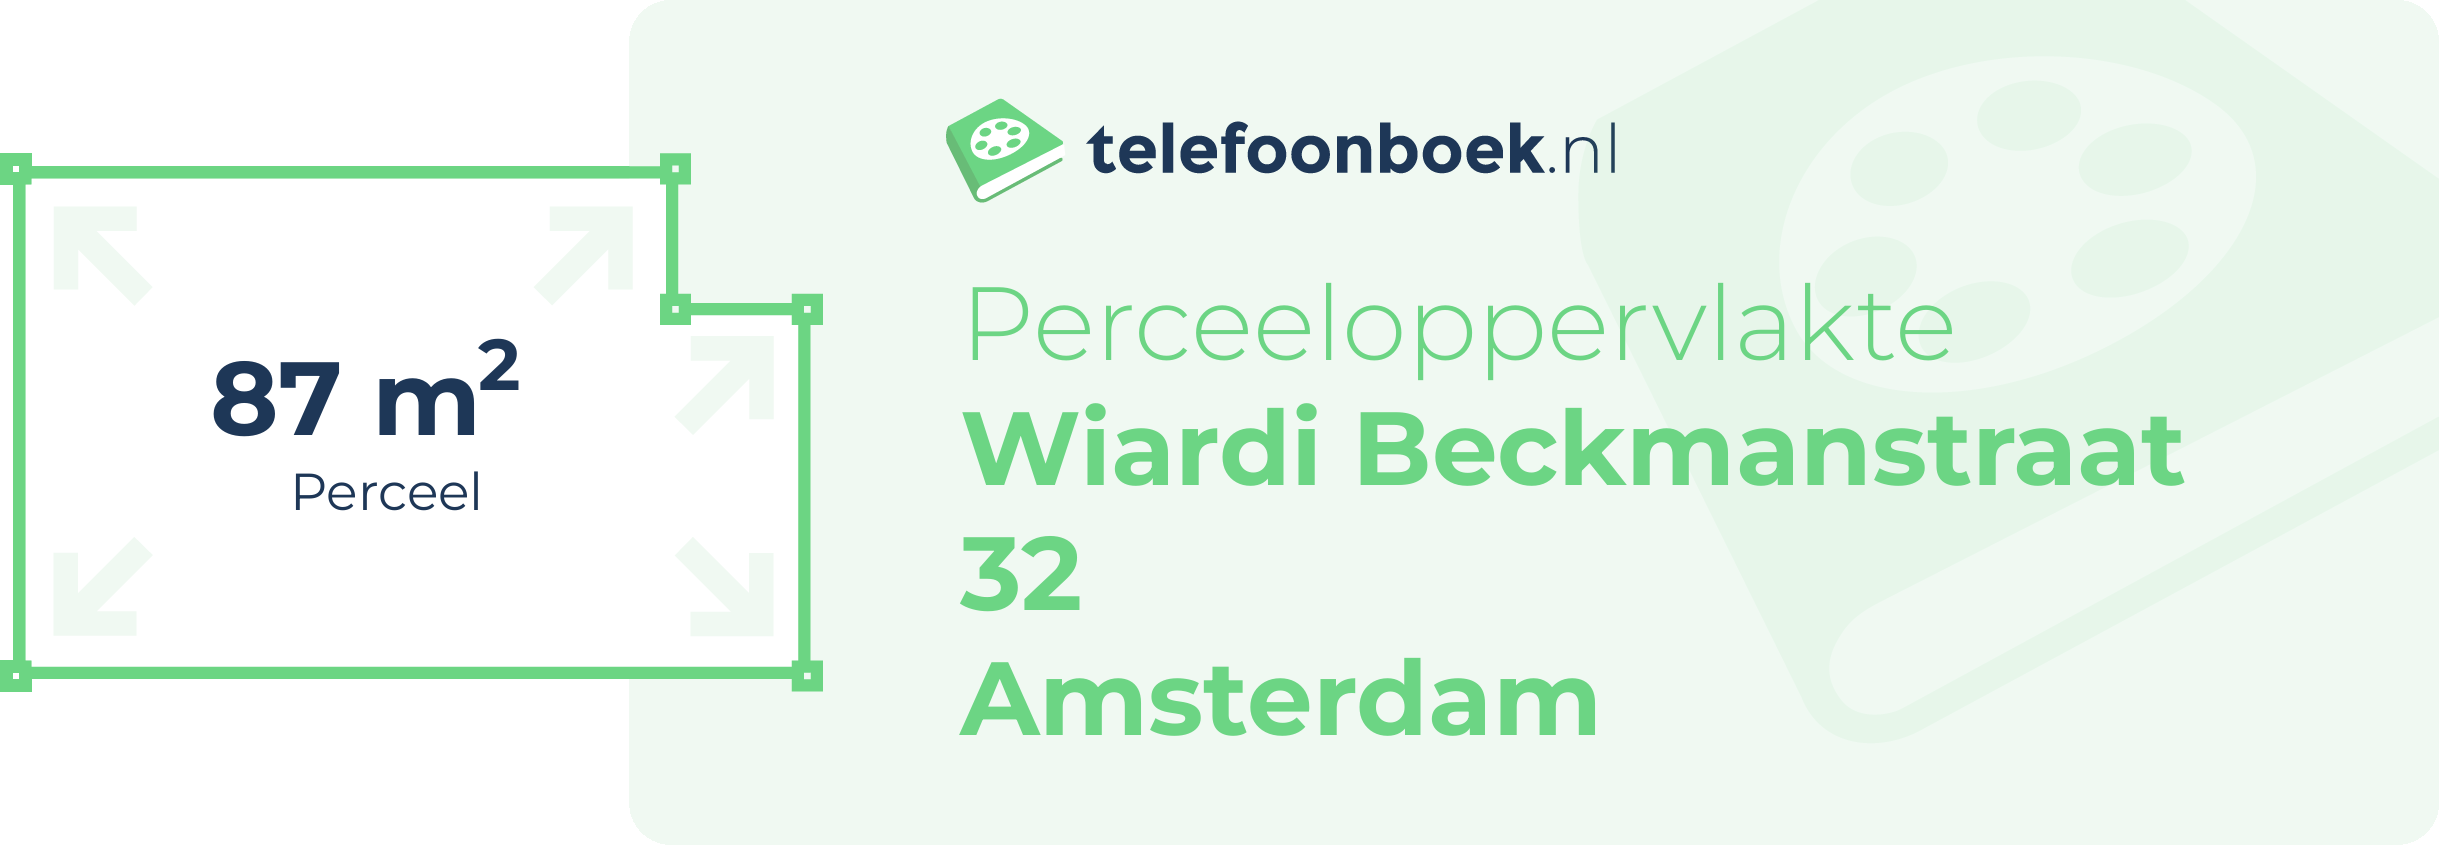 Perceeloppervlakte Wiardi Beckmanstraat 32 Amsterdam